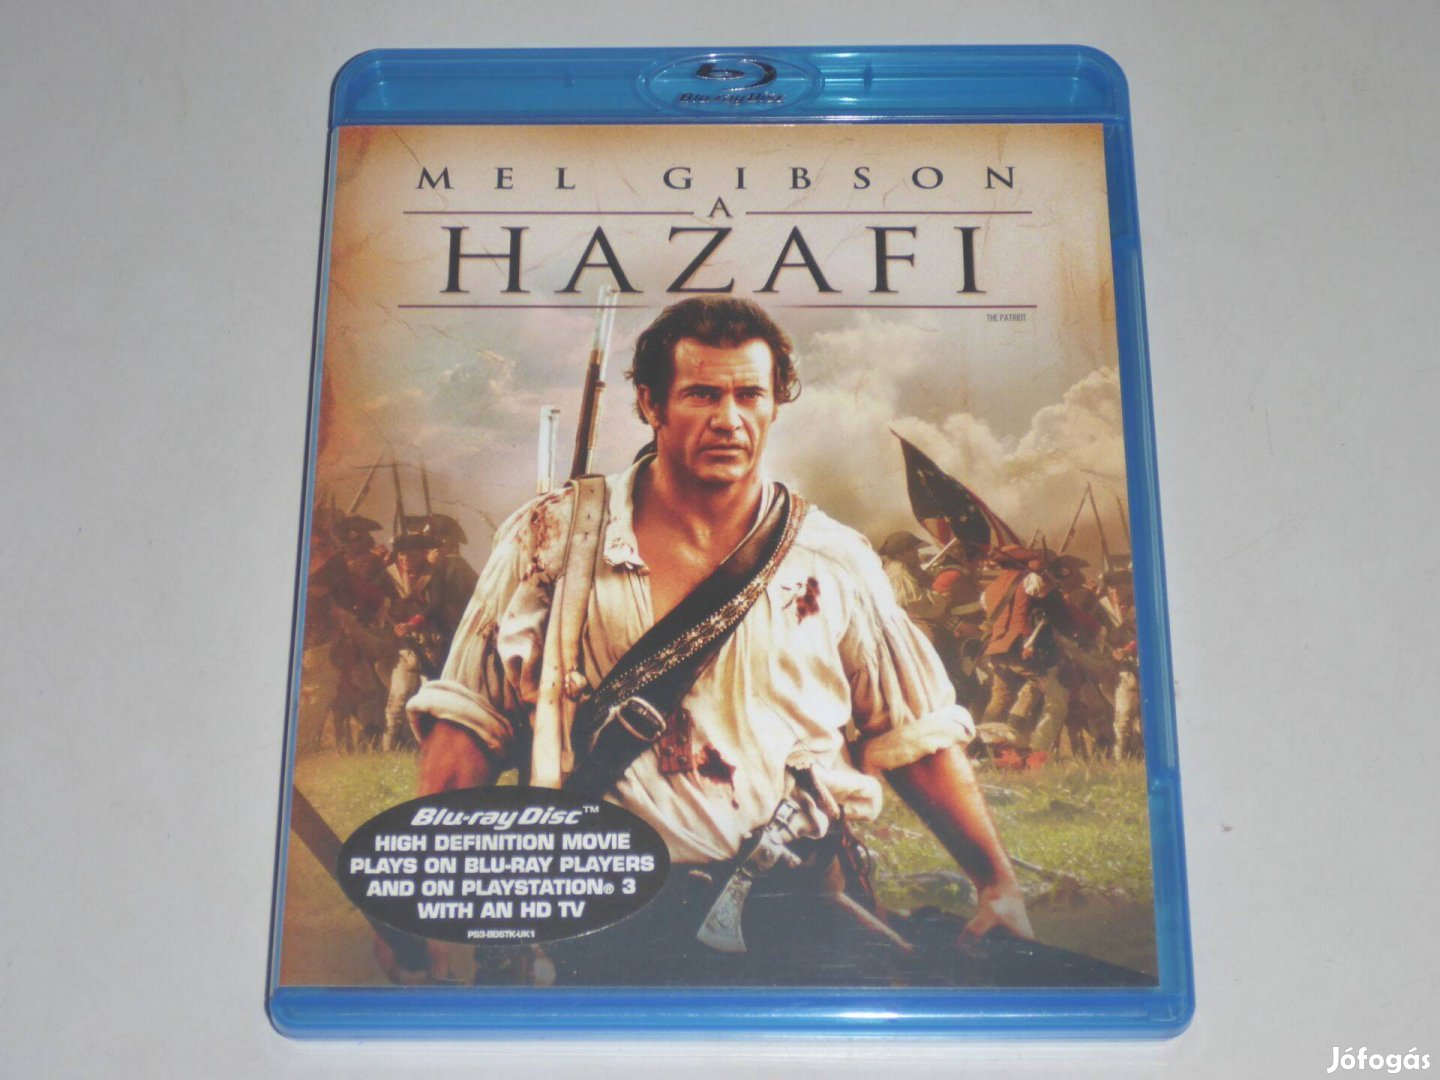 A hazafi blu-ray film